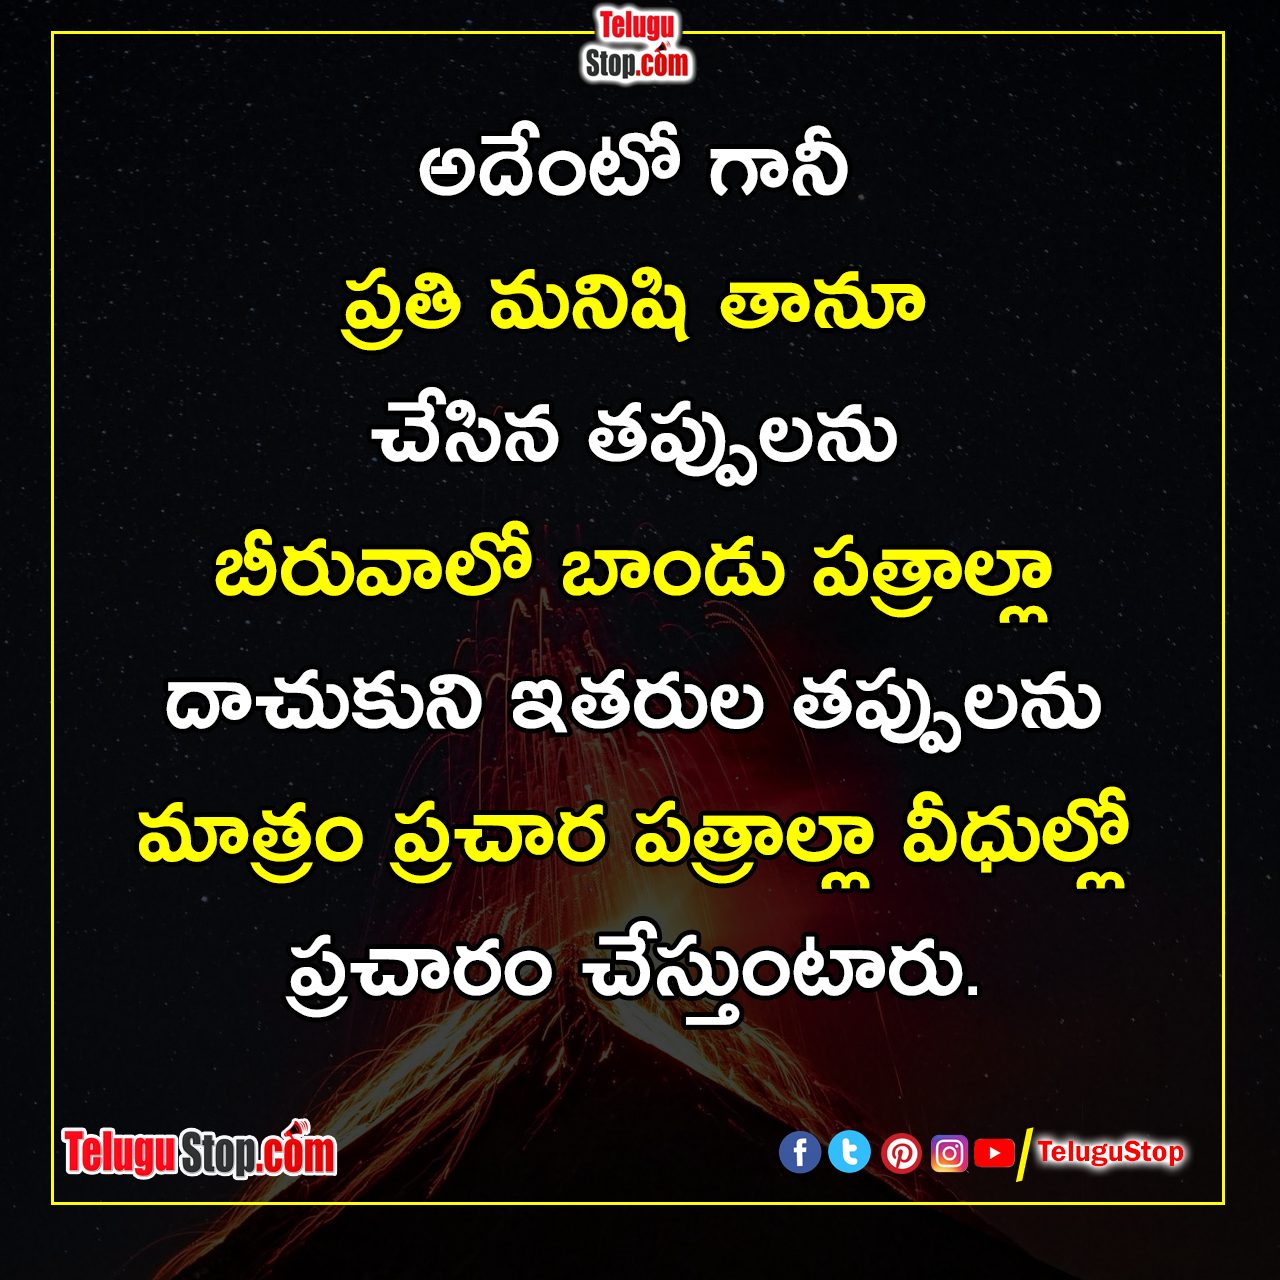 Telugu quotes friendship kavithalu miss failure prema touching heart breakup quotations fake missing